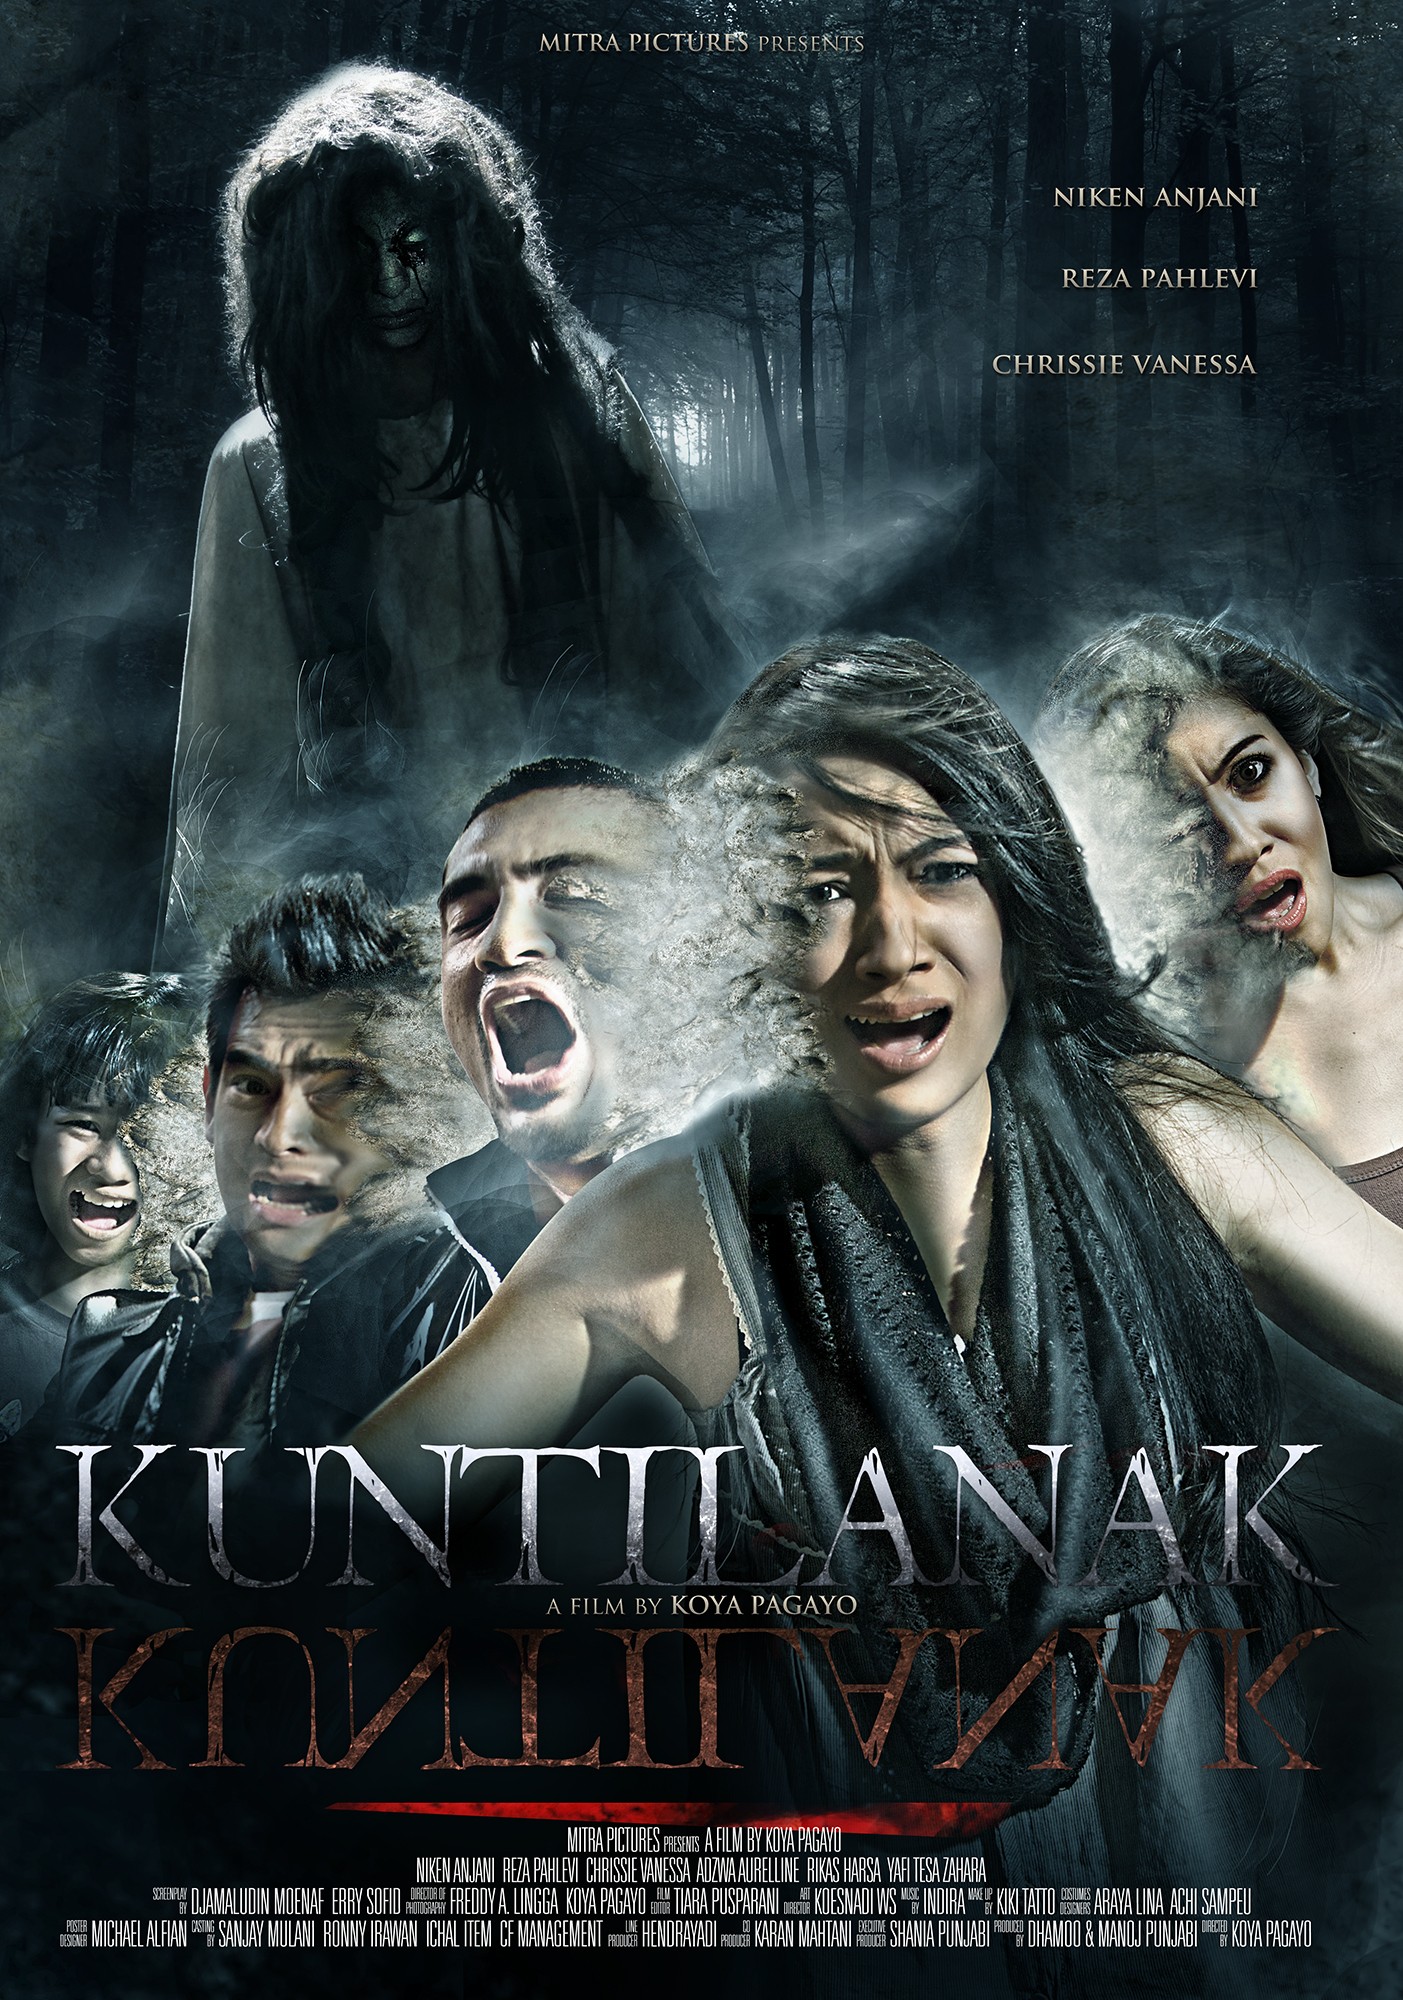 Mega Sized Movie Poster Image for Kuntilanak-kuntilanak 